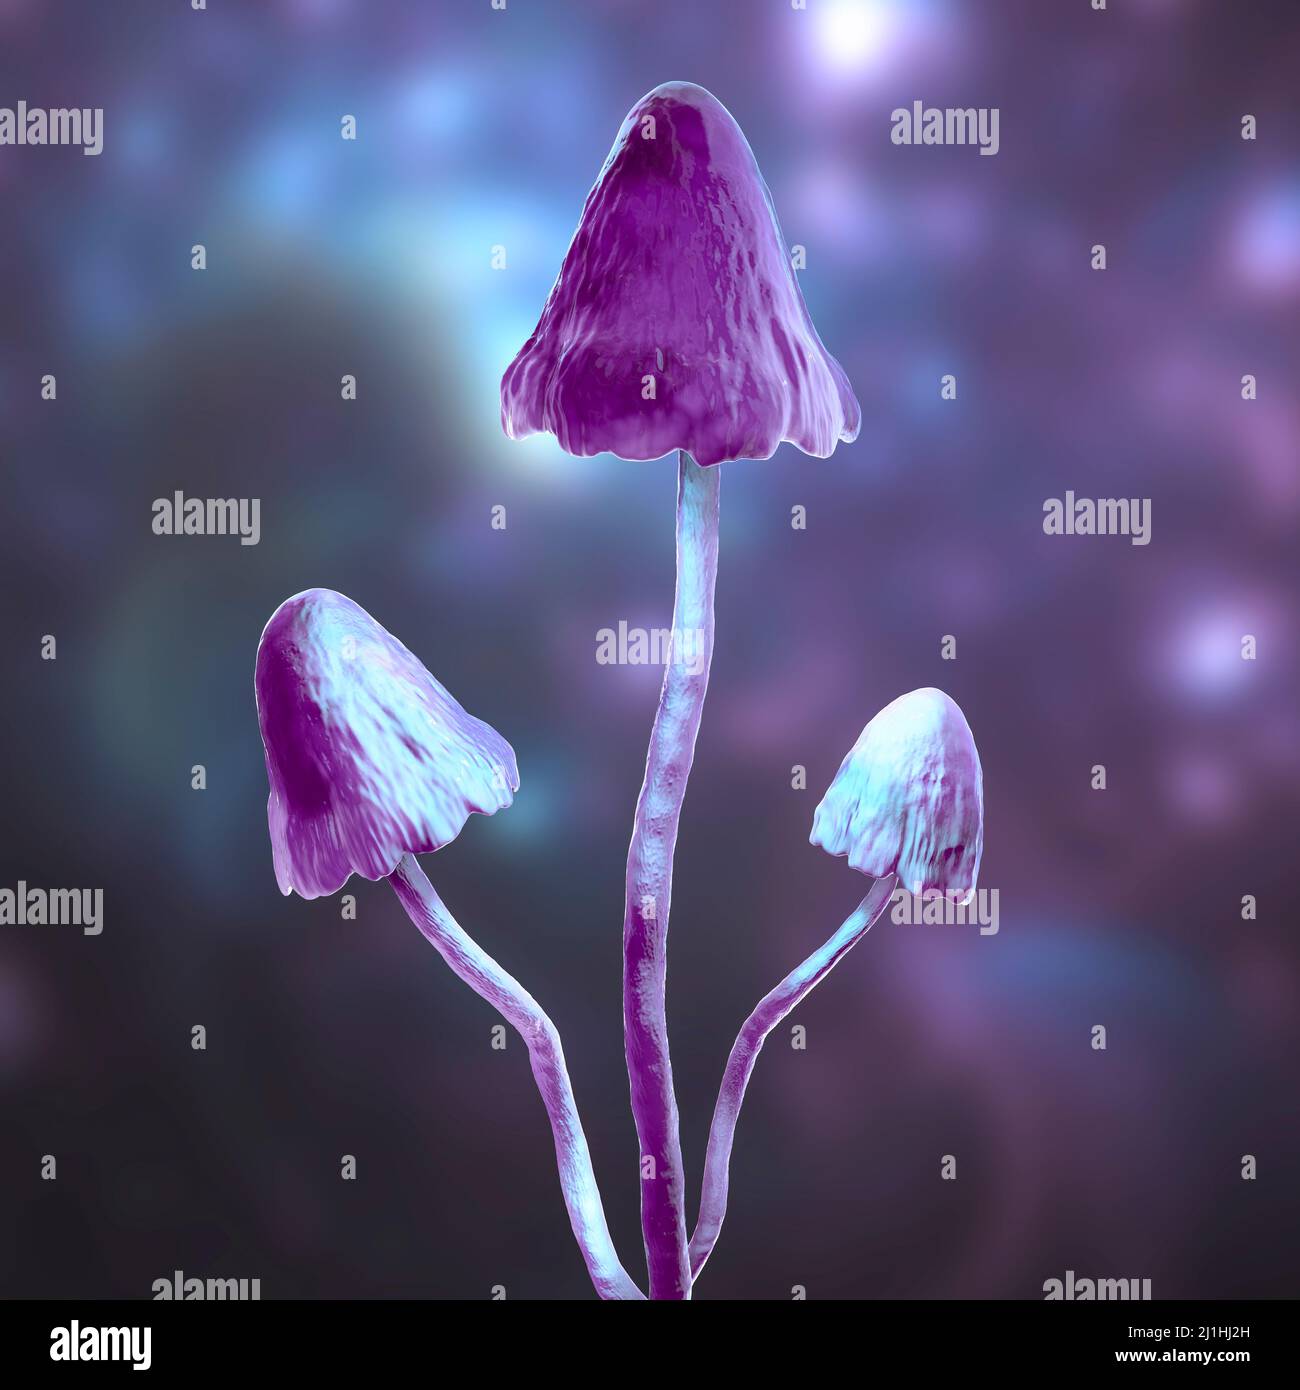 Magic mushrooms, illustration Stock Photo